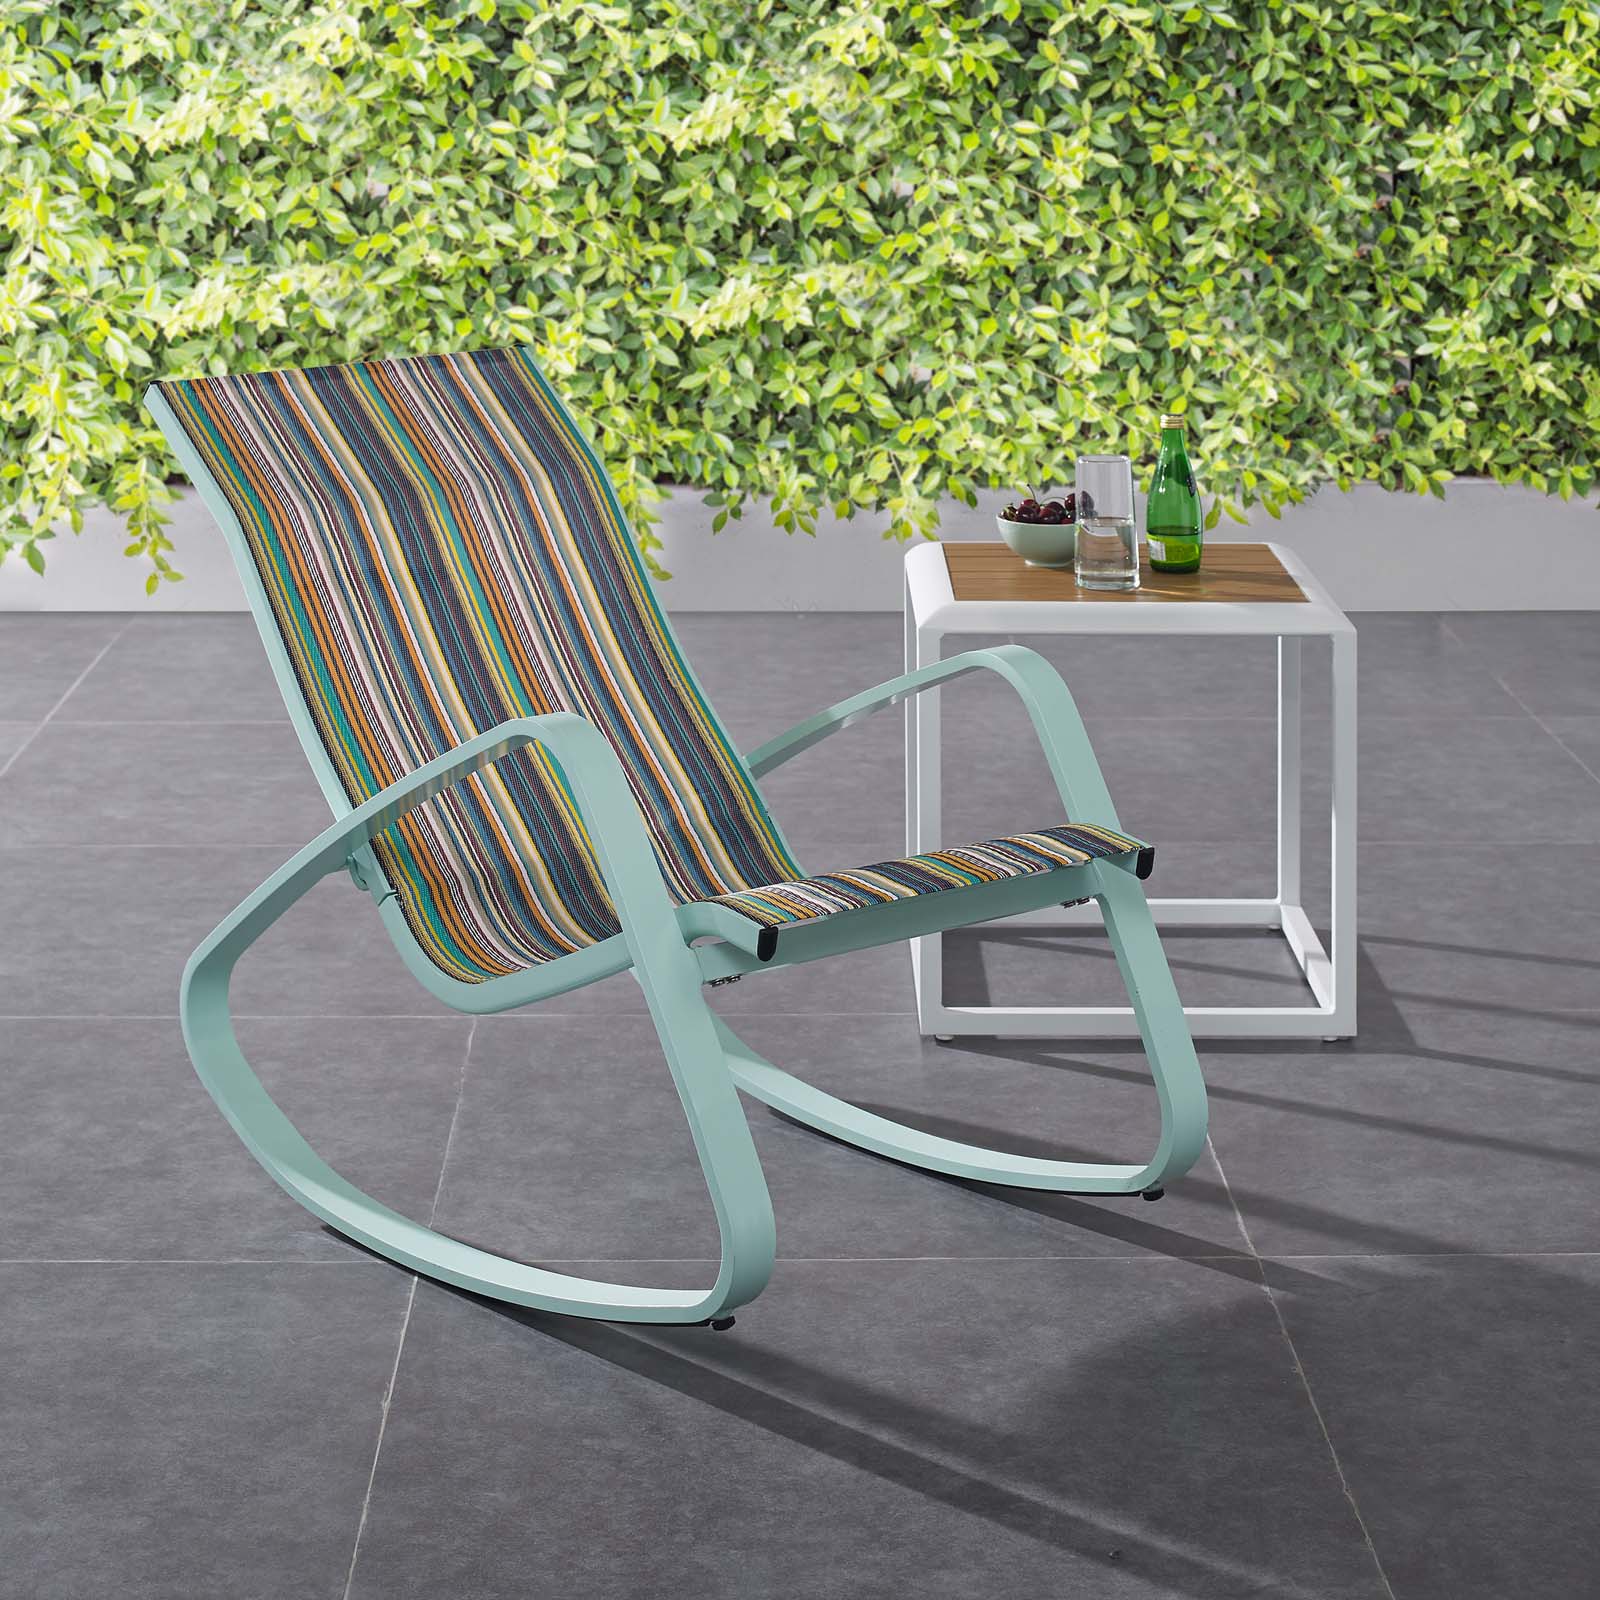 Modern Contemporary Urban Design Outdoor Patio Balcony Garden Furniture Locking Lounge Chair Armchair, Aluminum Metal Steel, Green - image 2 of 6